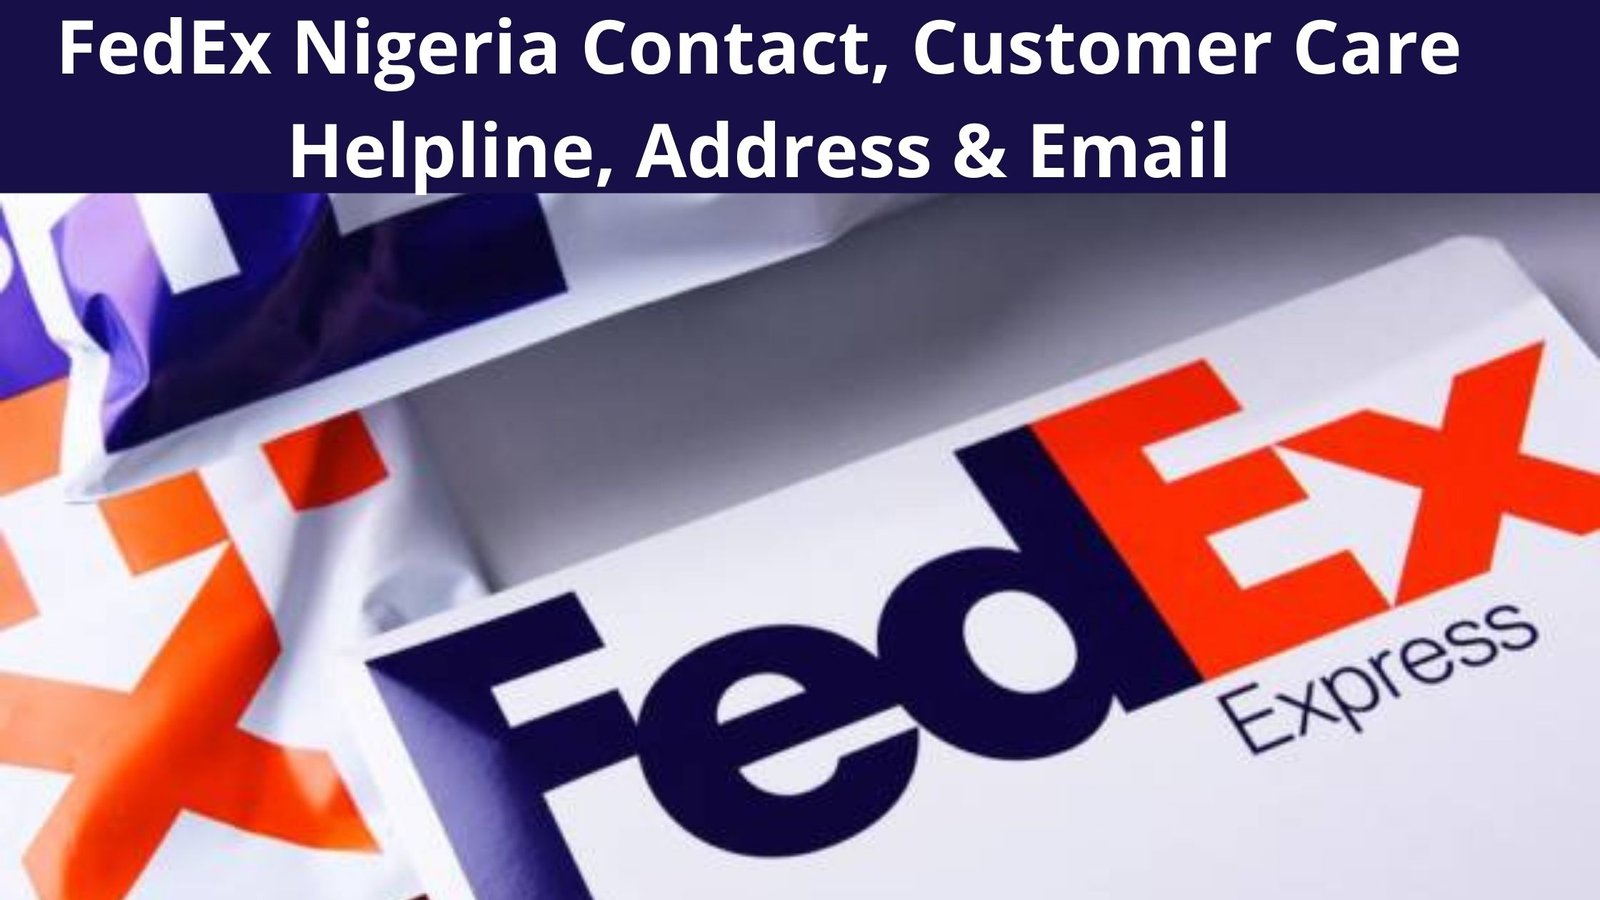 FedEx Nigeria Contact